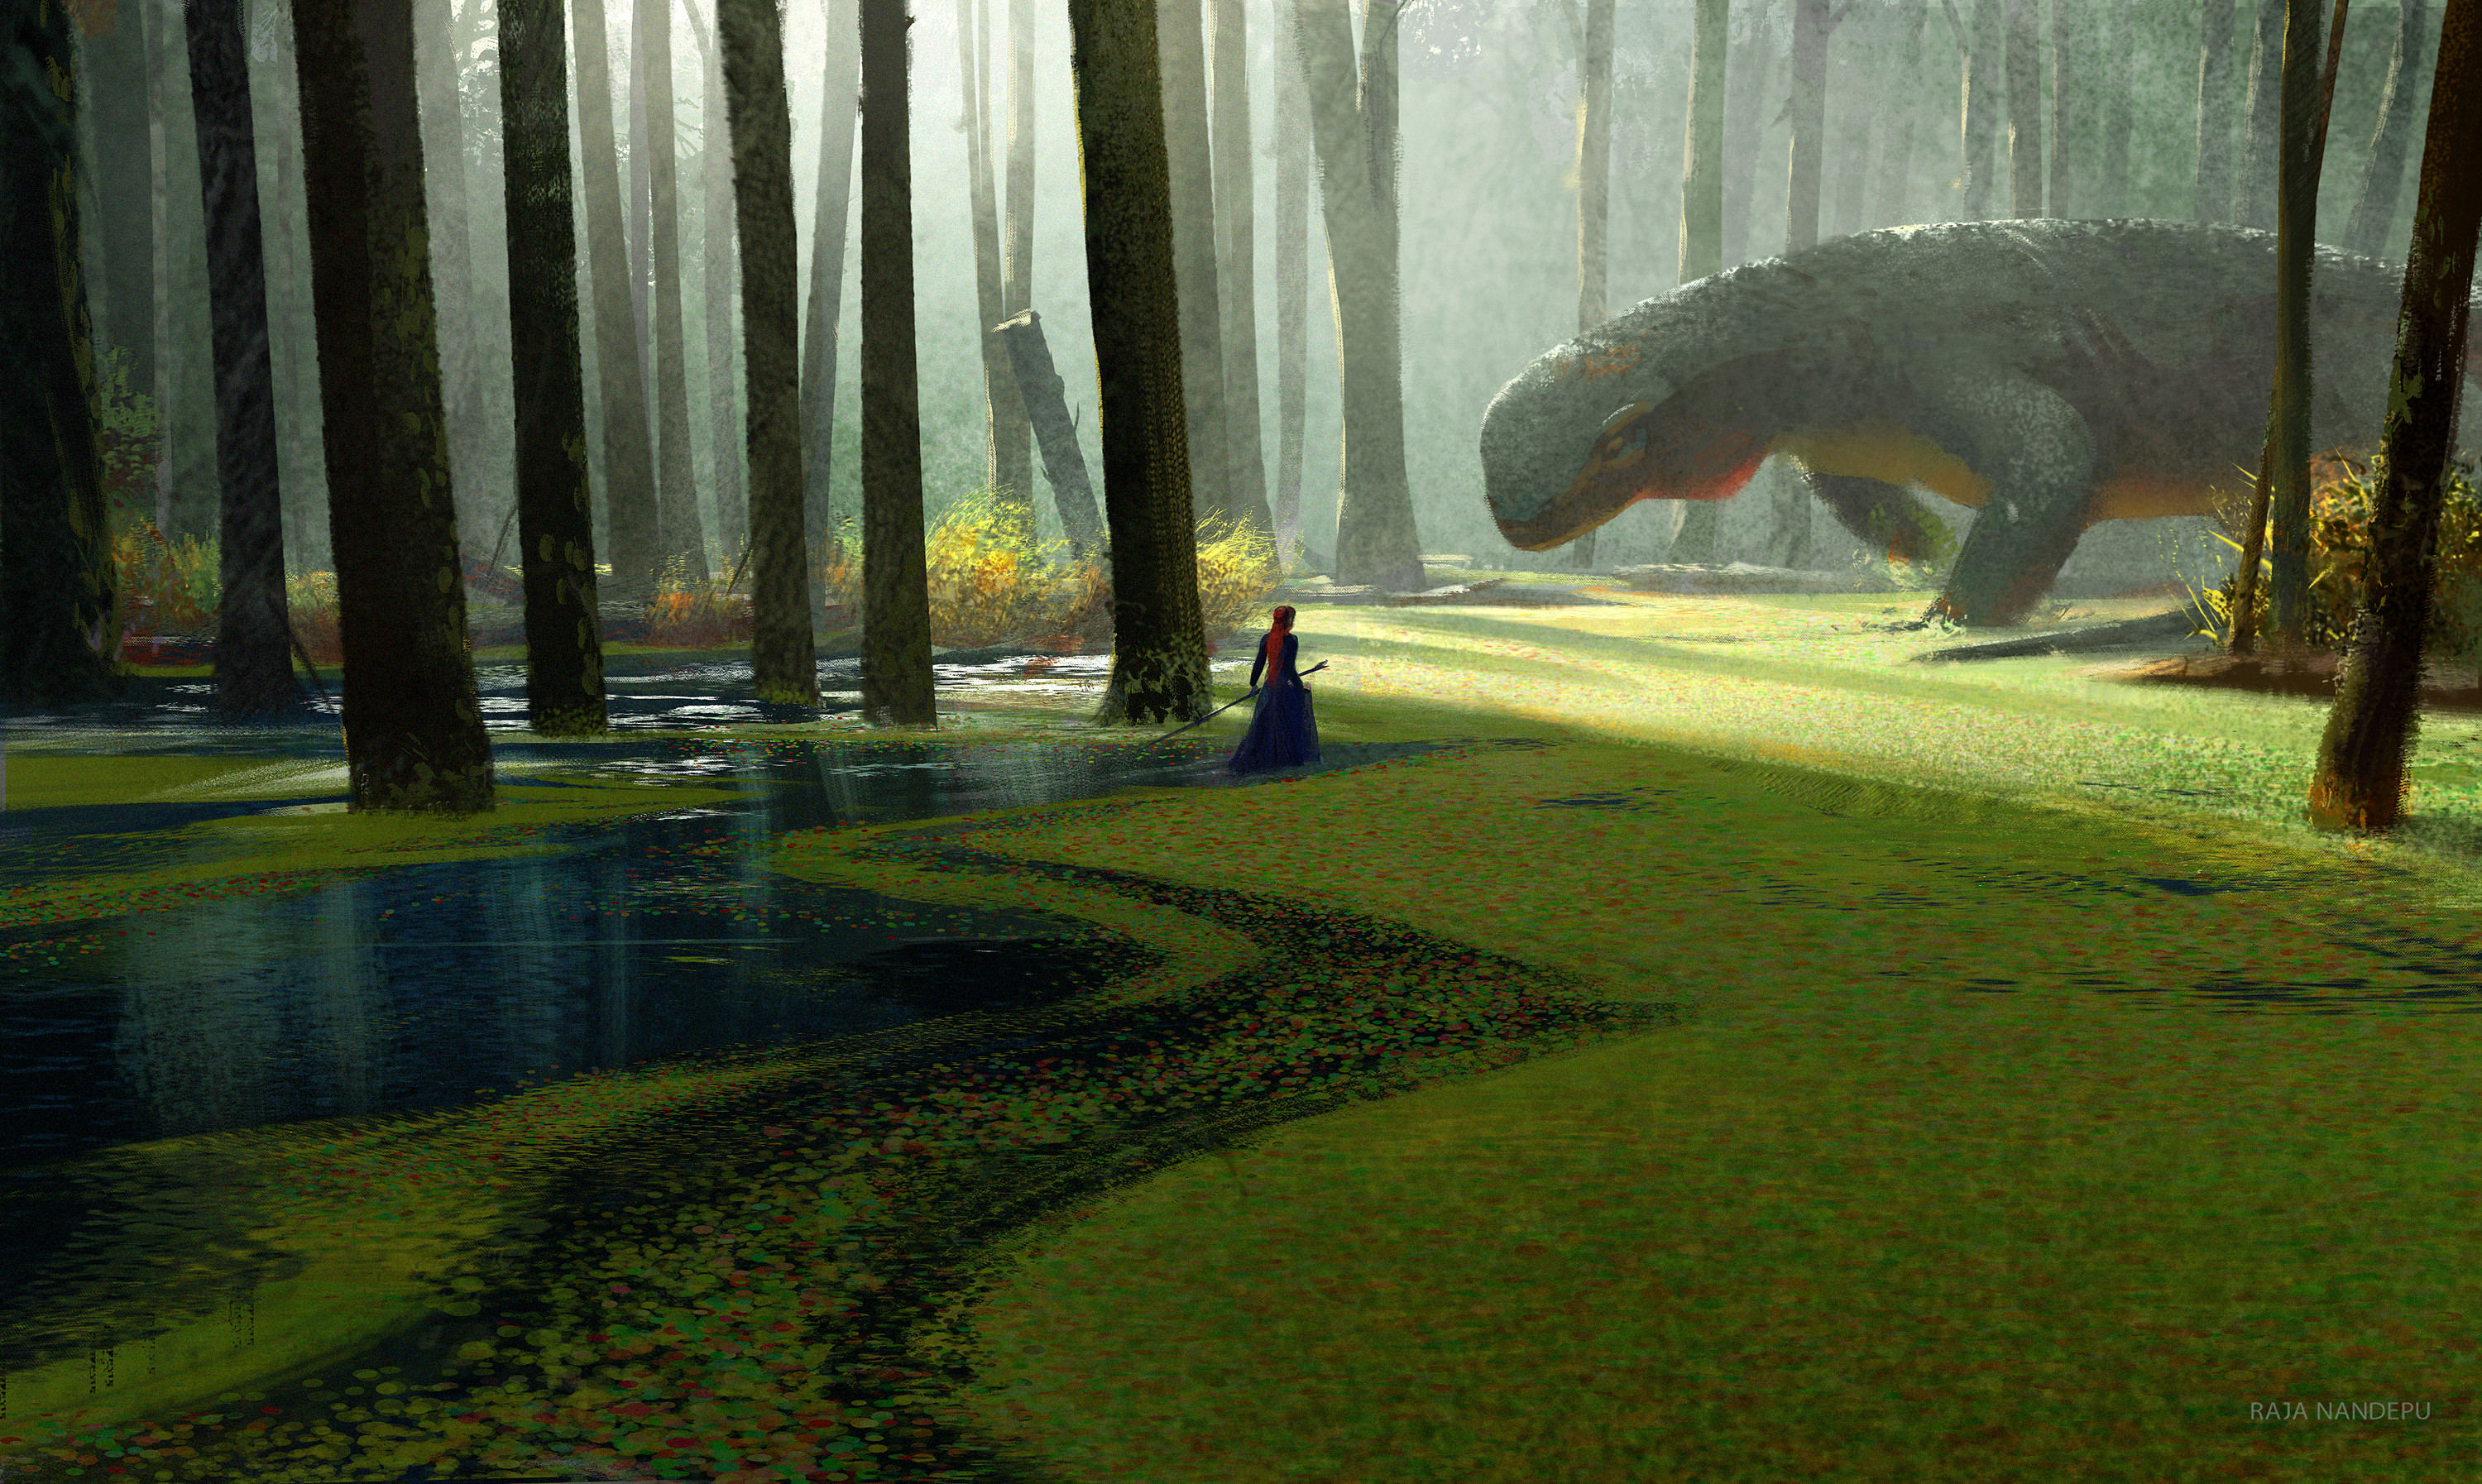 General 3000x1794 digital art artwork concept art fantasy art swamp creature trees leaves witch Raja Nandepu